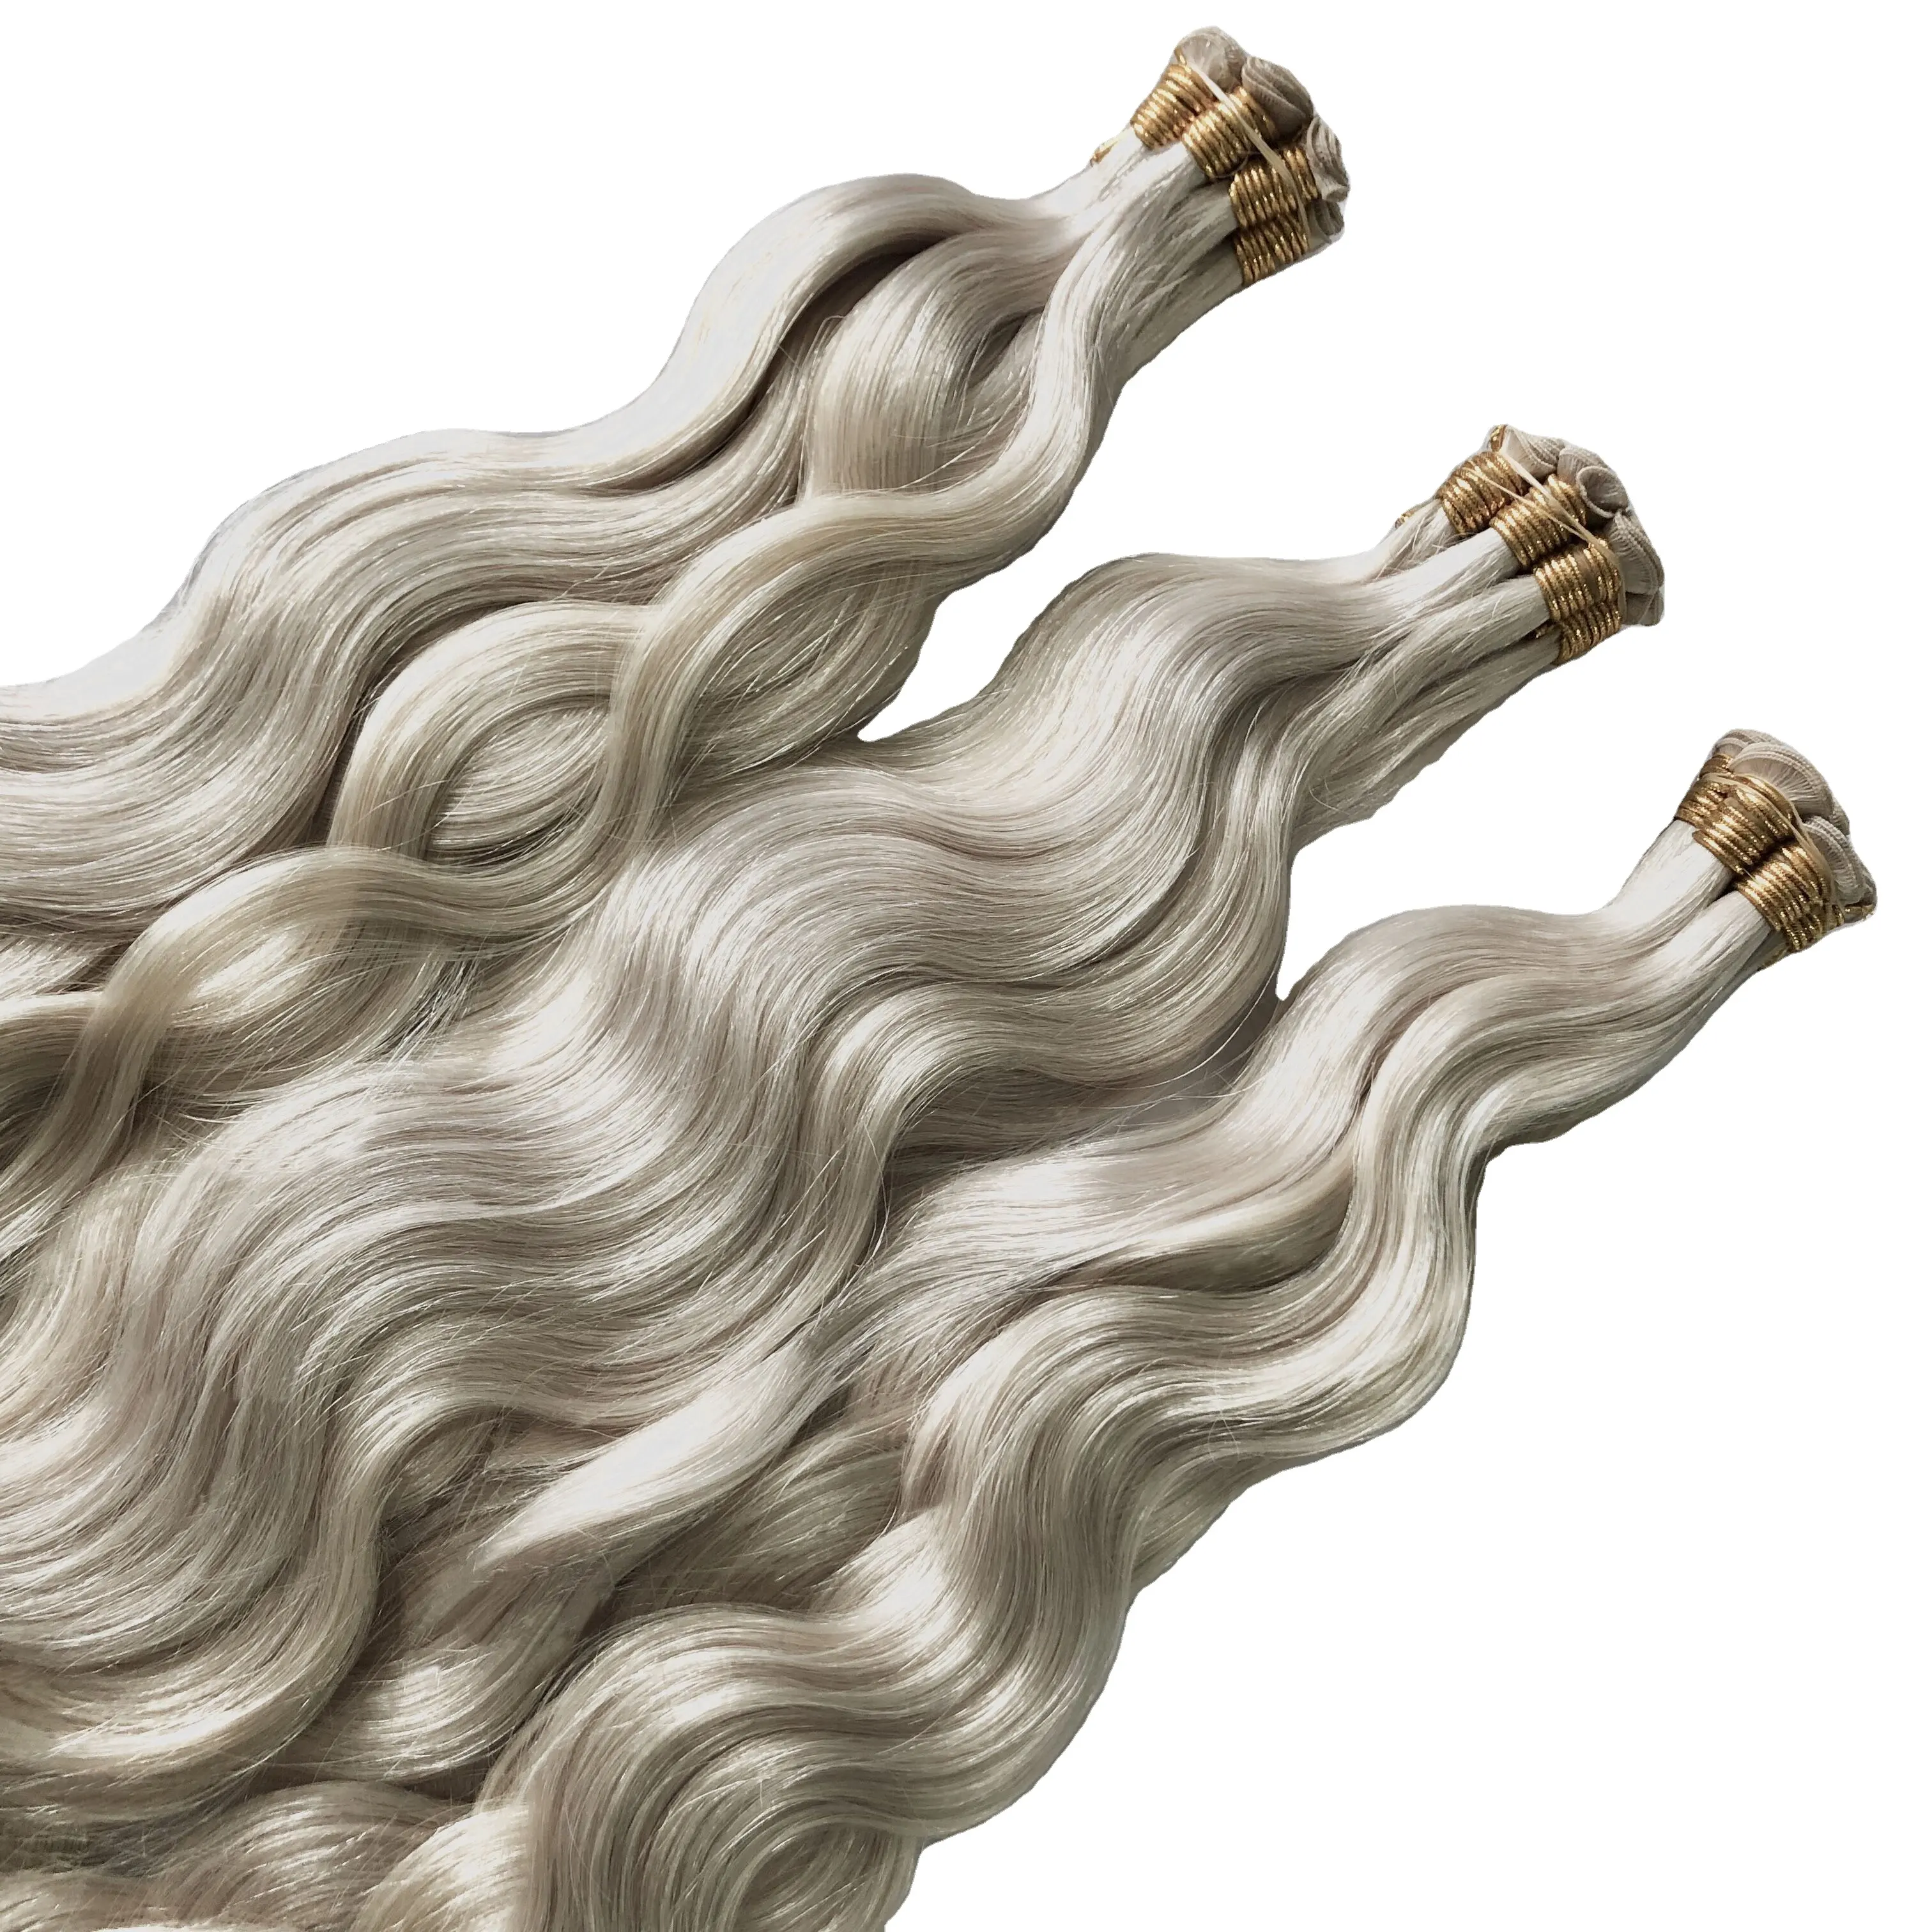 Natural Wave Whitest สีบลอนด์ยังไม่ได้มือผูก Weft Hair Extension Super Double Drawn